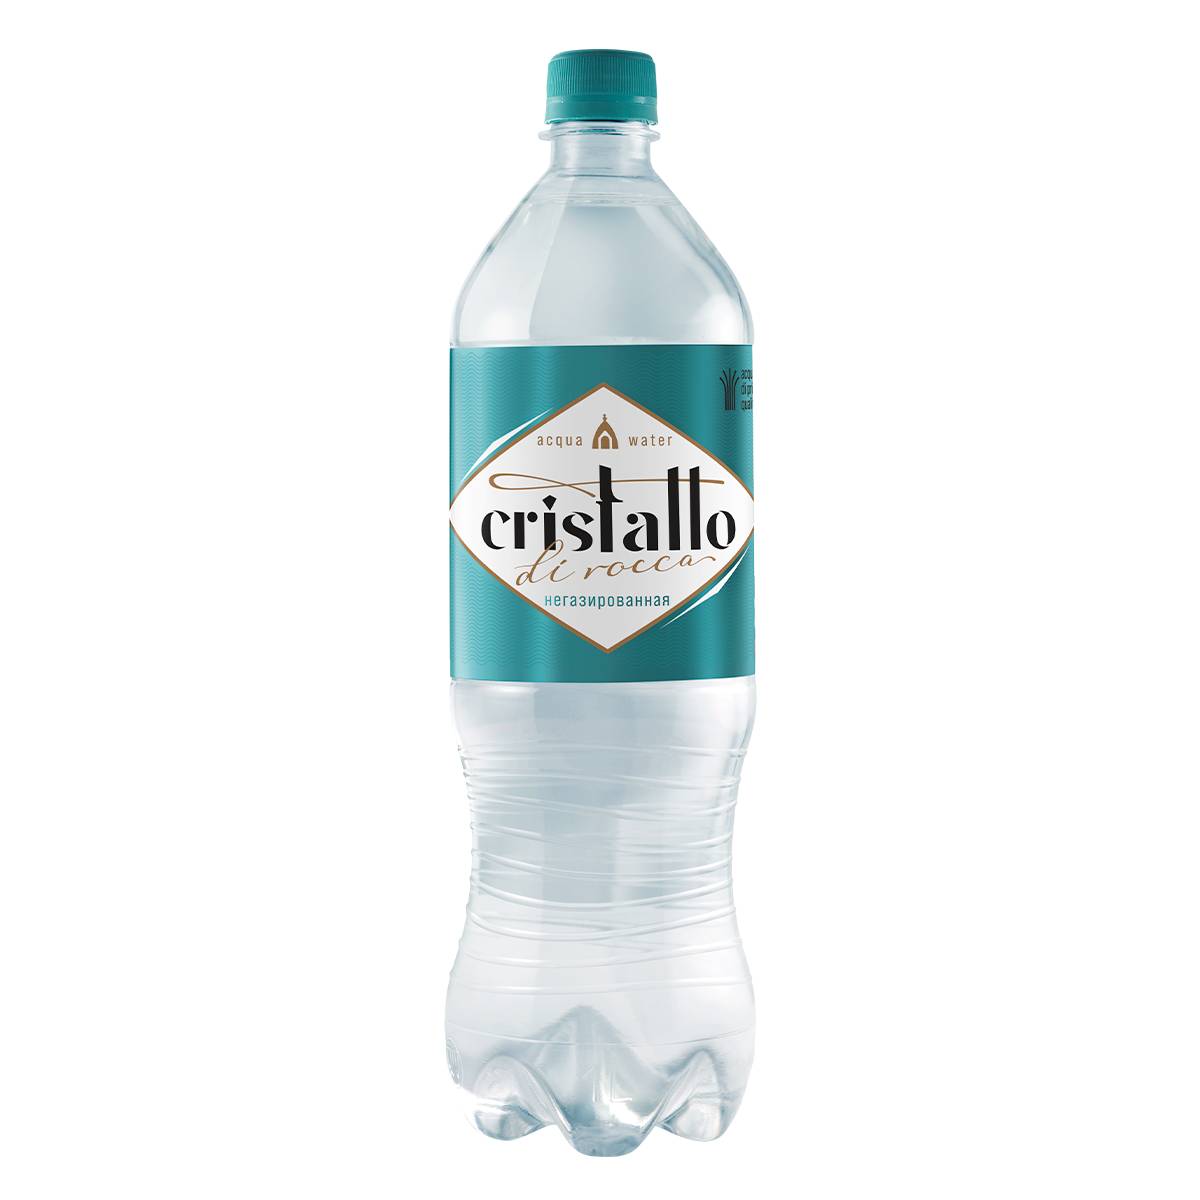 Вода Очаково Cristallo di rocco негазированная, 1 л